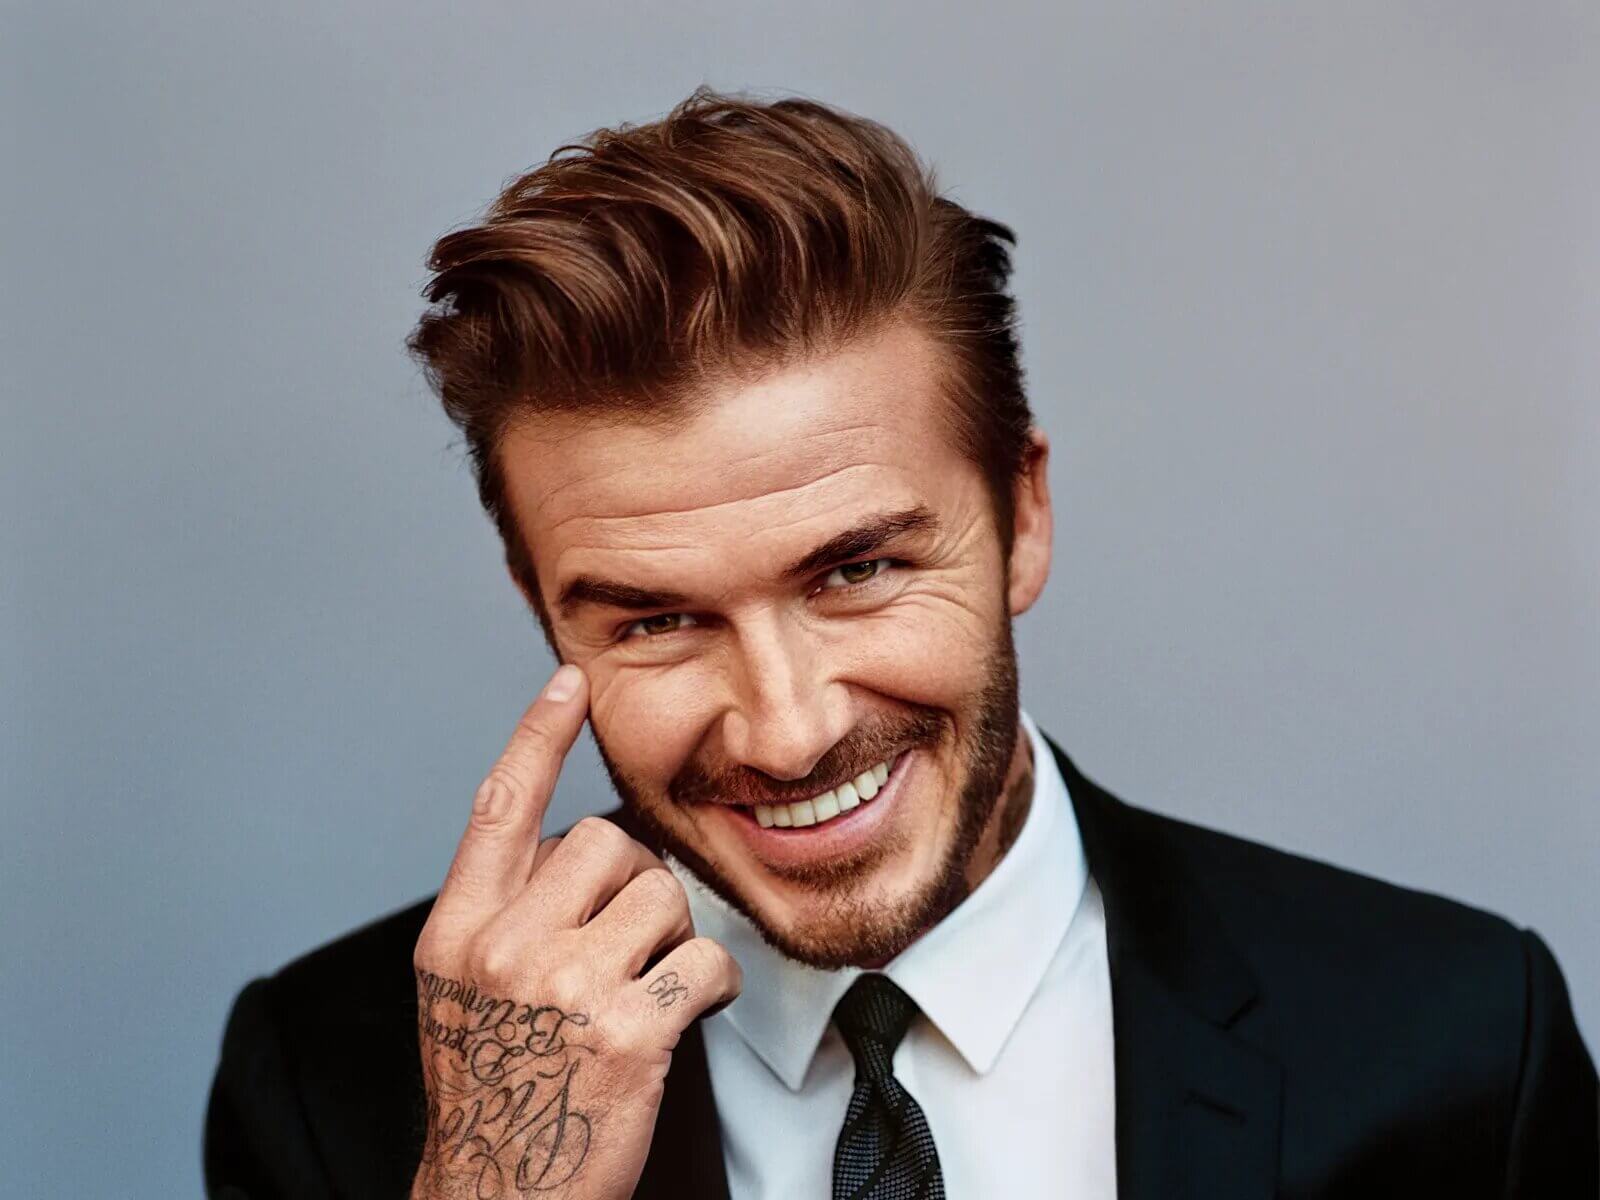 David-Beckham-Net-Worth-2022career-Wife-Cars-and-Real-Estate Details!